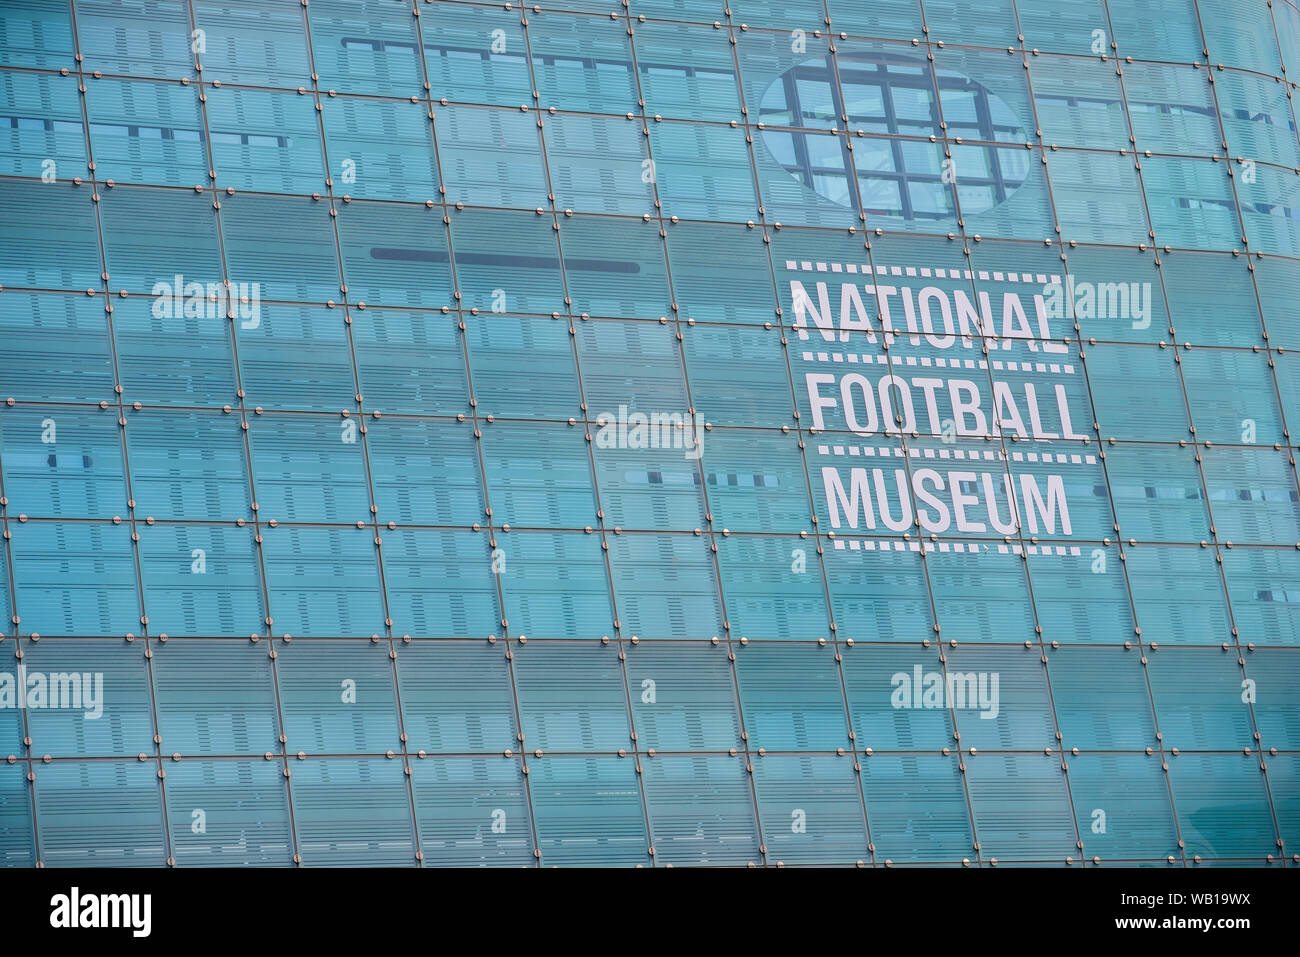 National Football Museum, Manchester, UK. Stock Photo